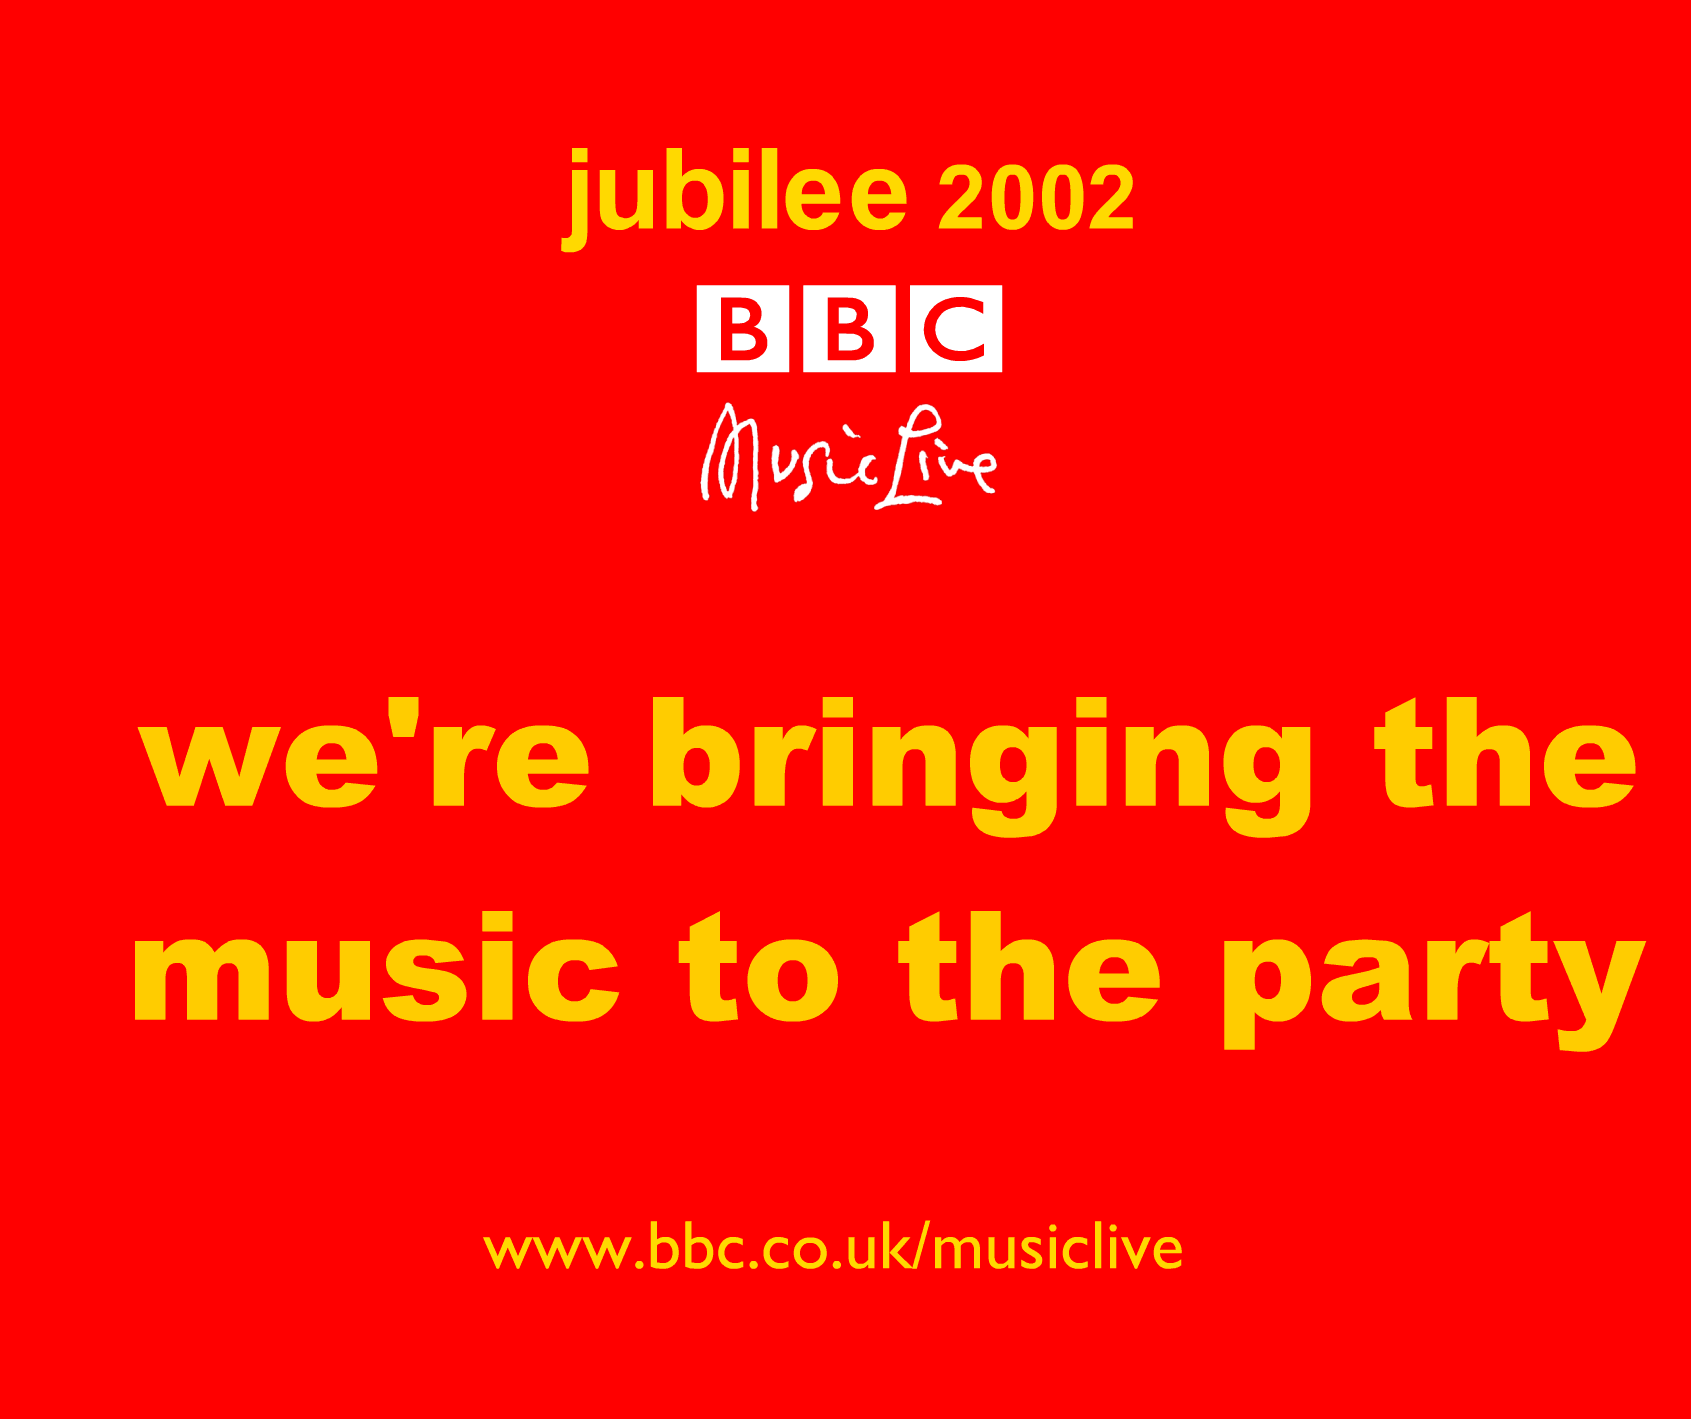 Jubilee 2002 BBC Music Live